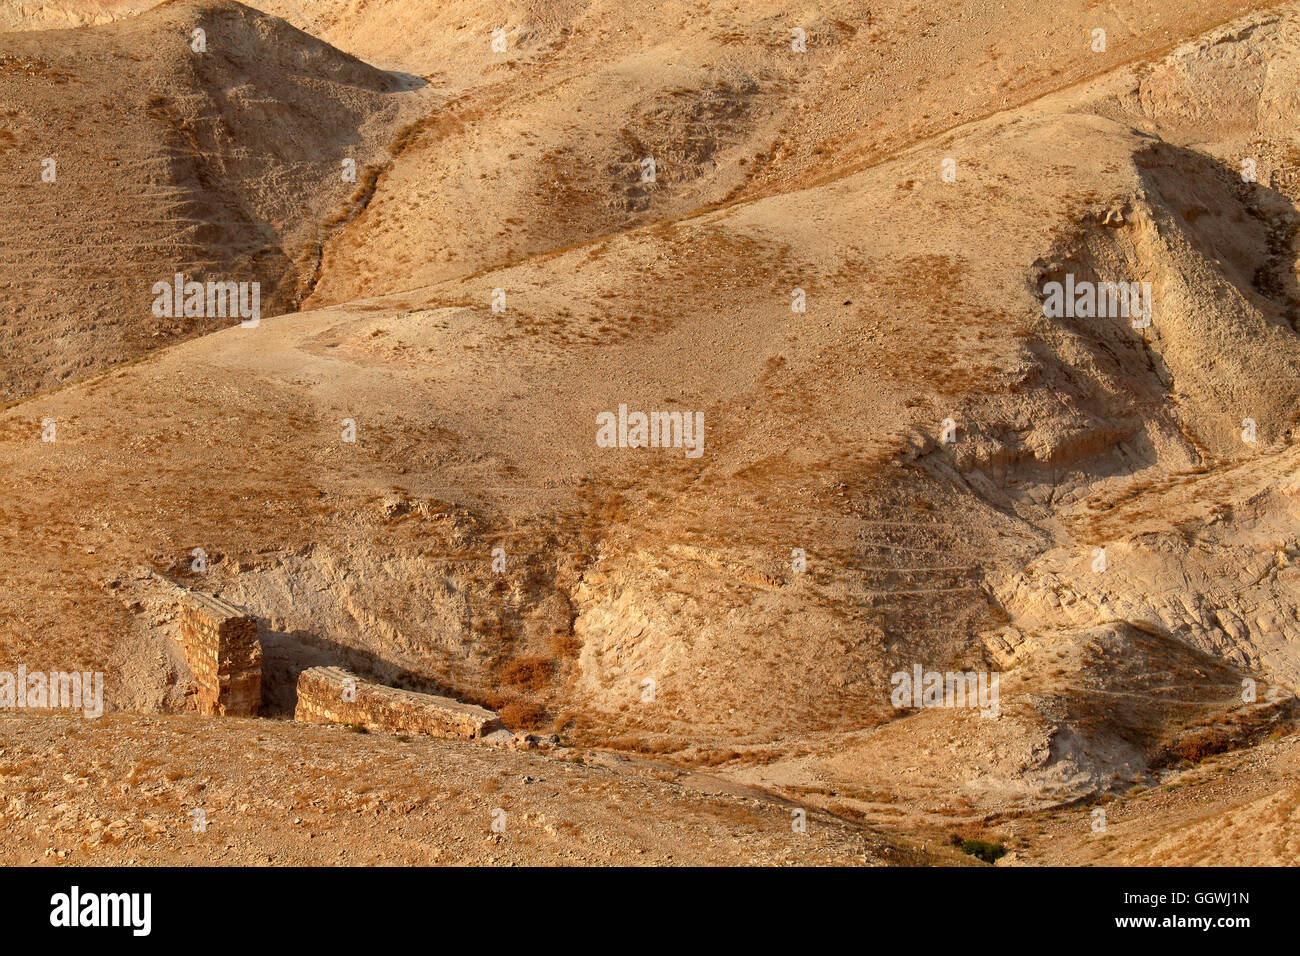 Mountainous Judean desert landscape near Jericho, Israel Stock Photo